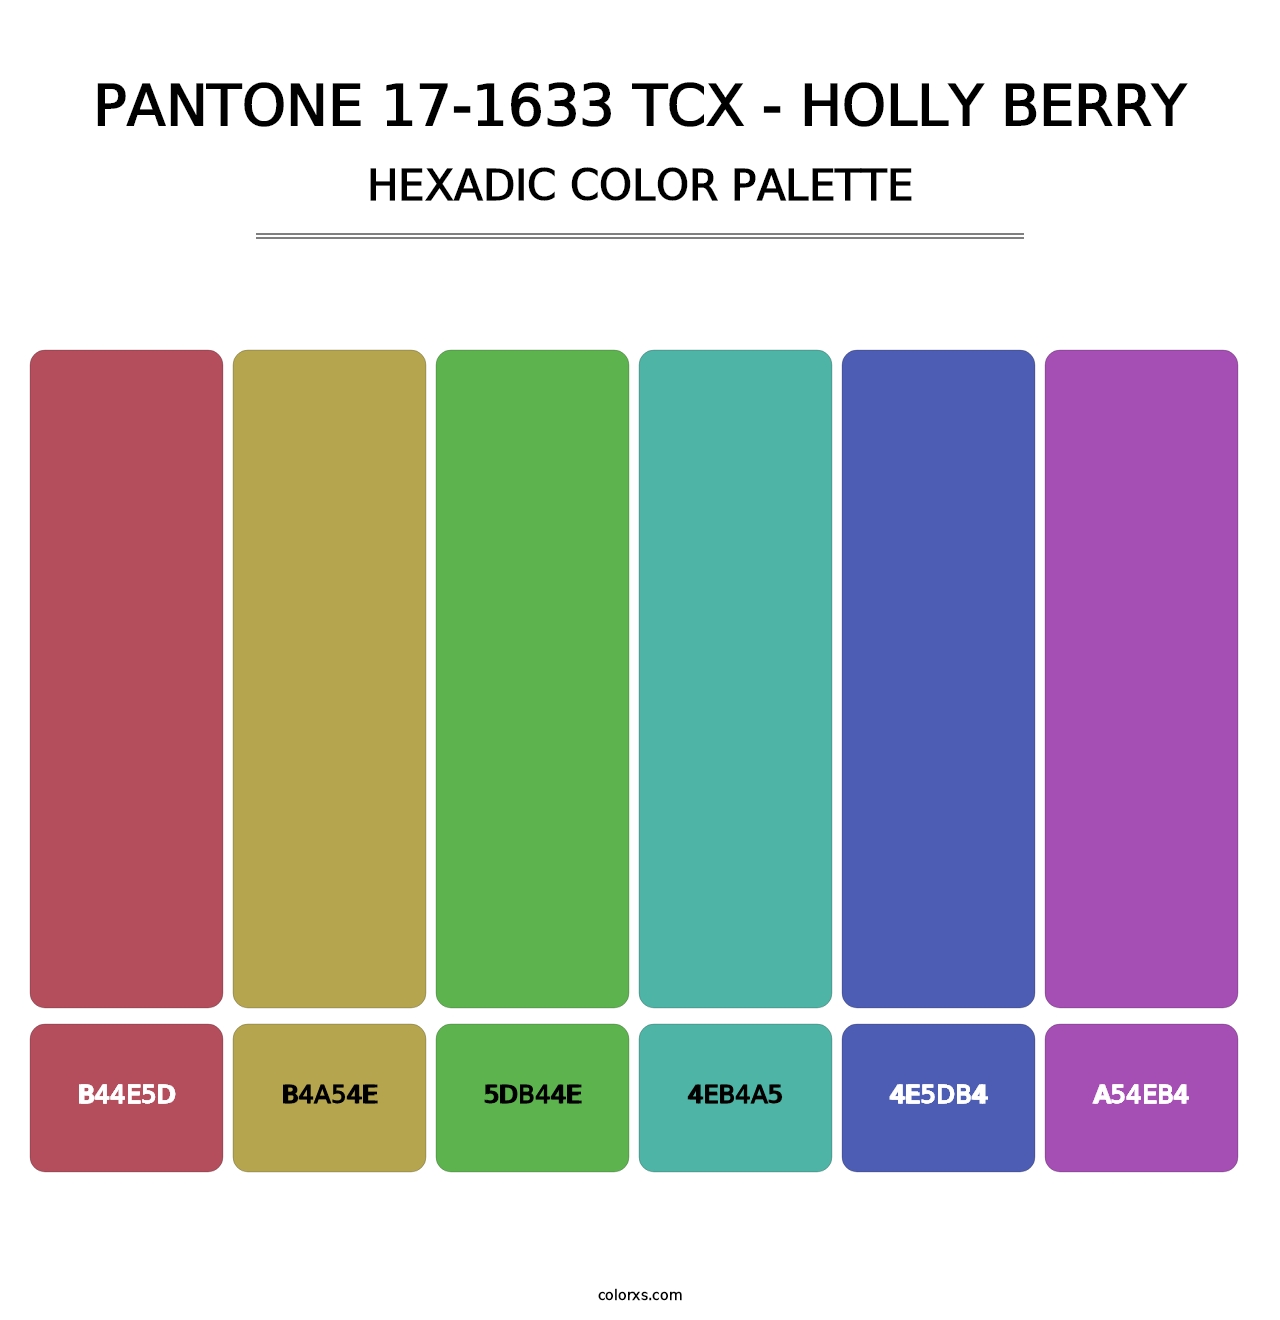 PANTONE 17-1633 TCX - Holly Berry - Hexadic Color Palette